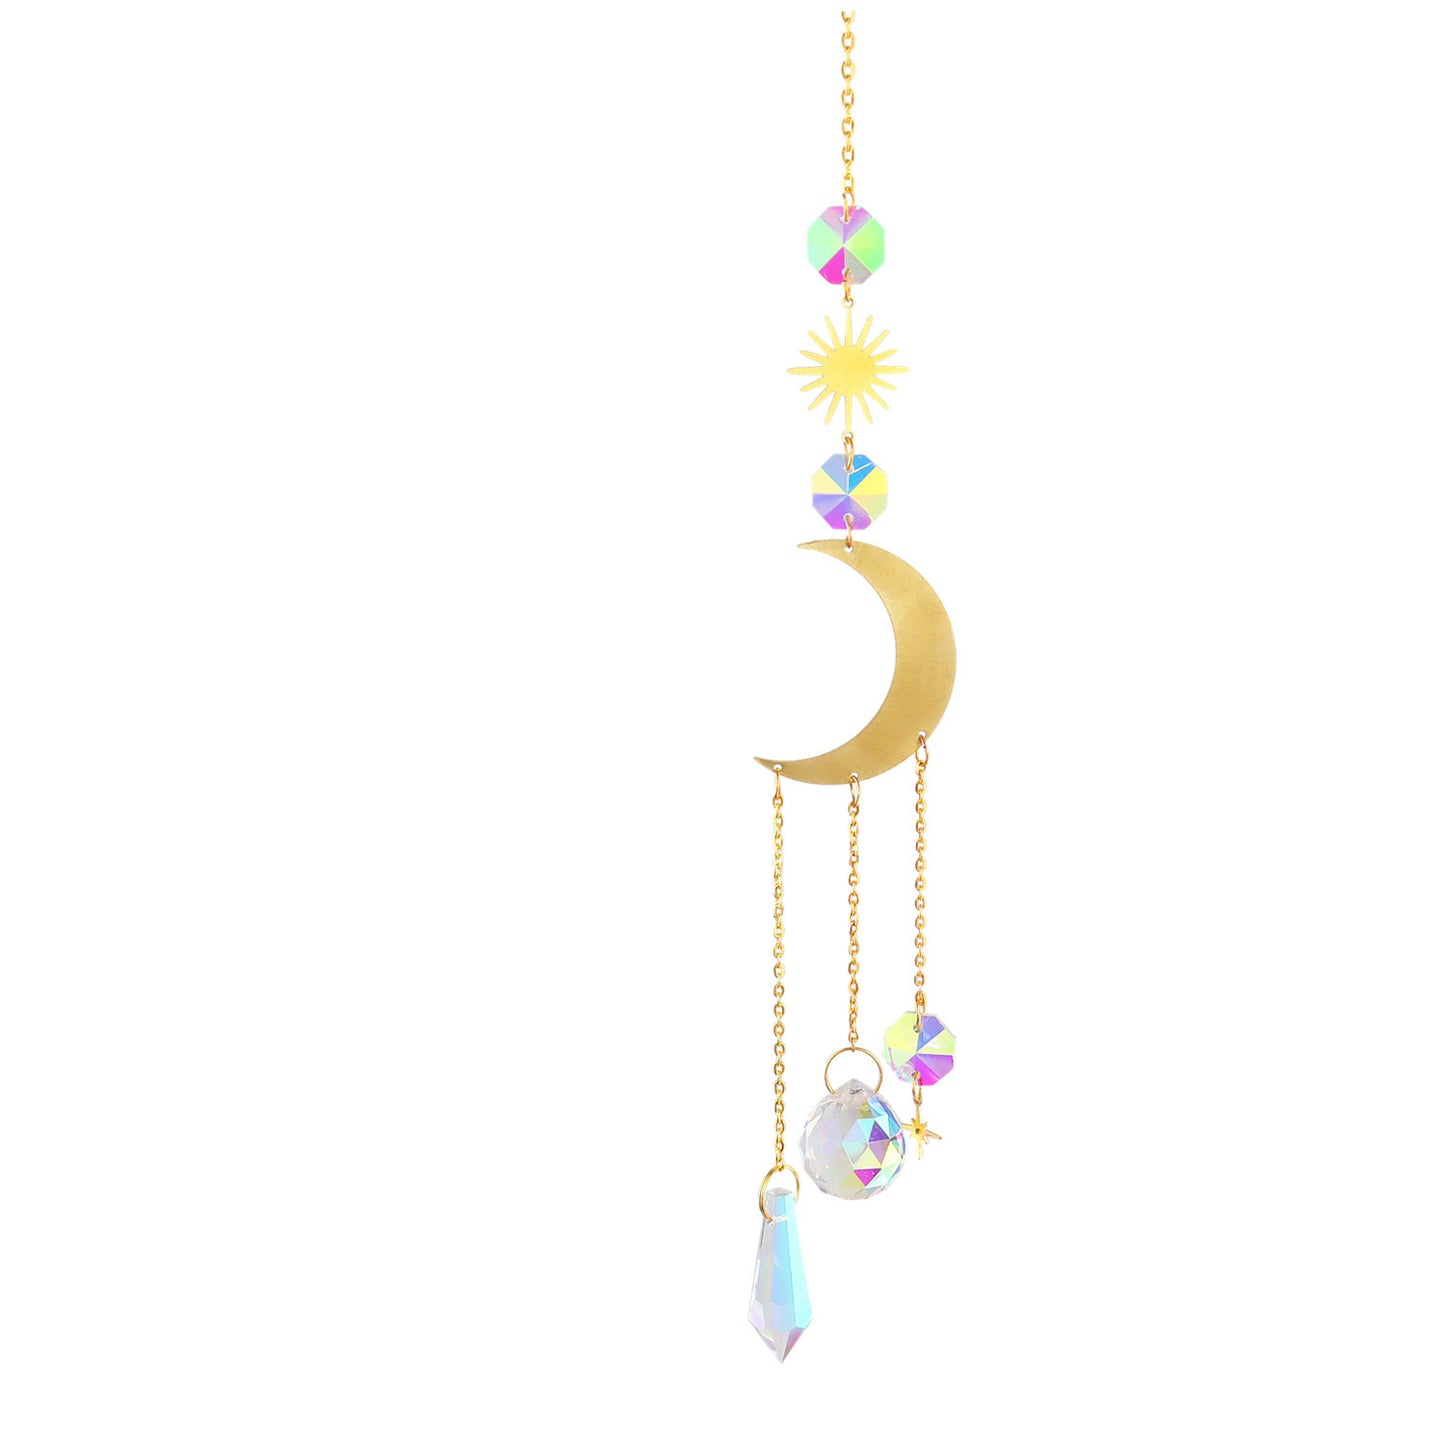 K9 Aura Crystal Hanger   Full & Crescent Moon with Stars Sun Brass - Long 45cm - China - NEW911